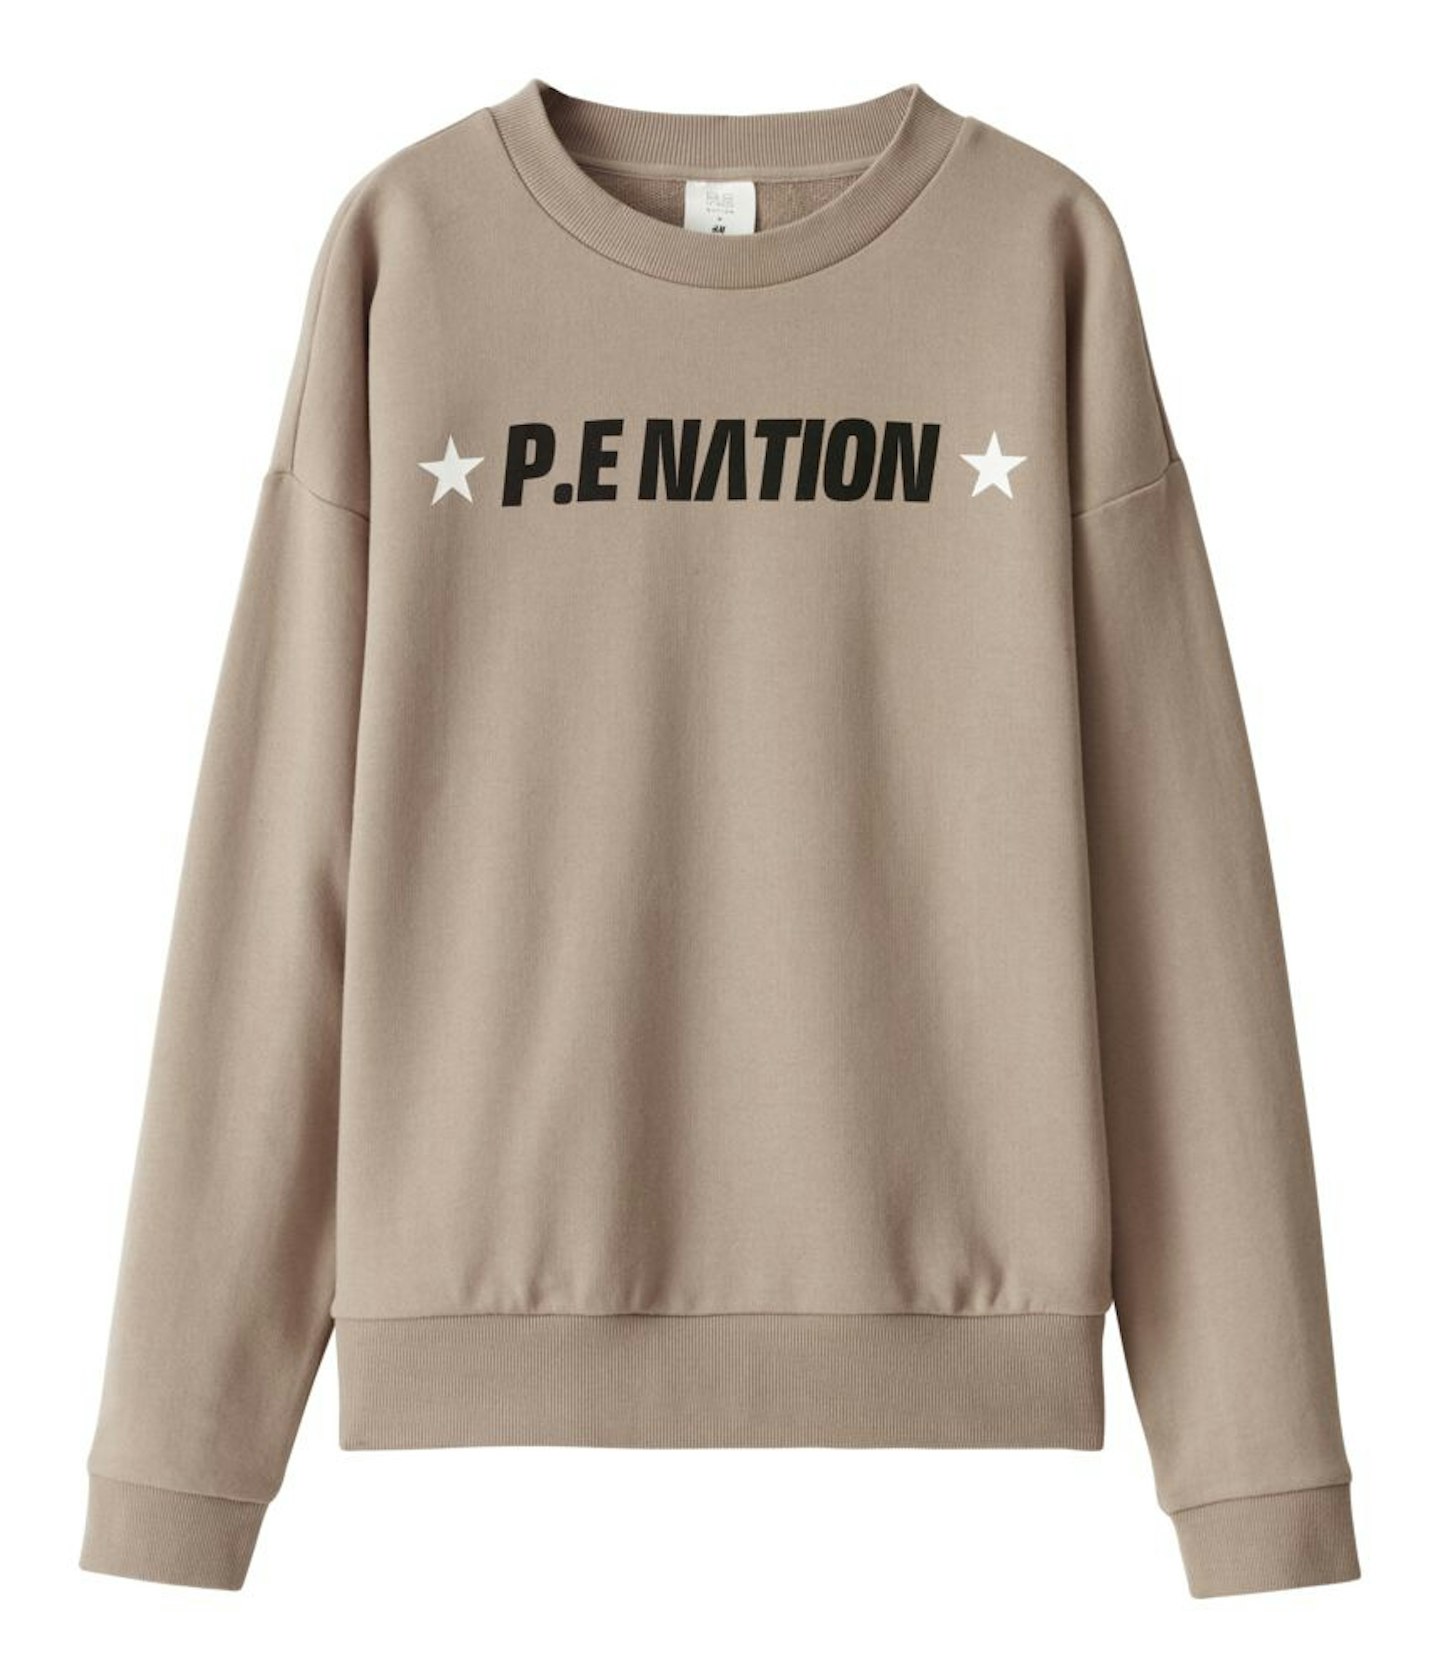 H&M x P.E Nation Cotton Sweatshirt, £24.99